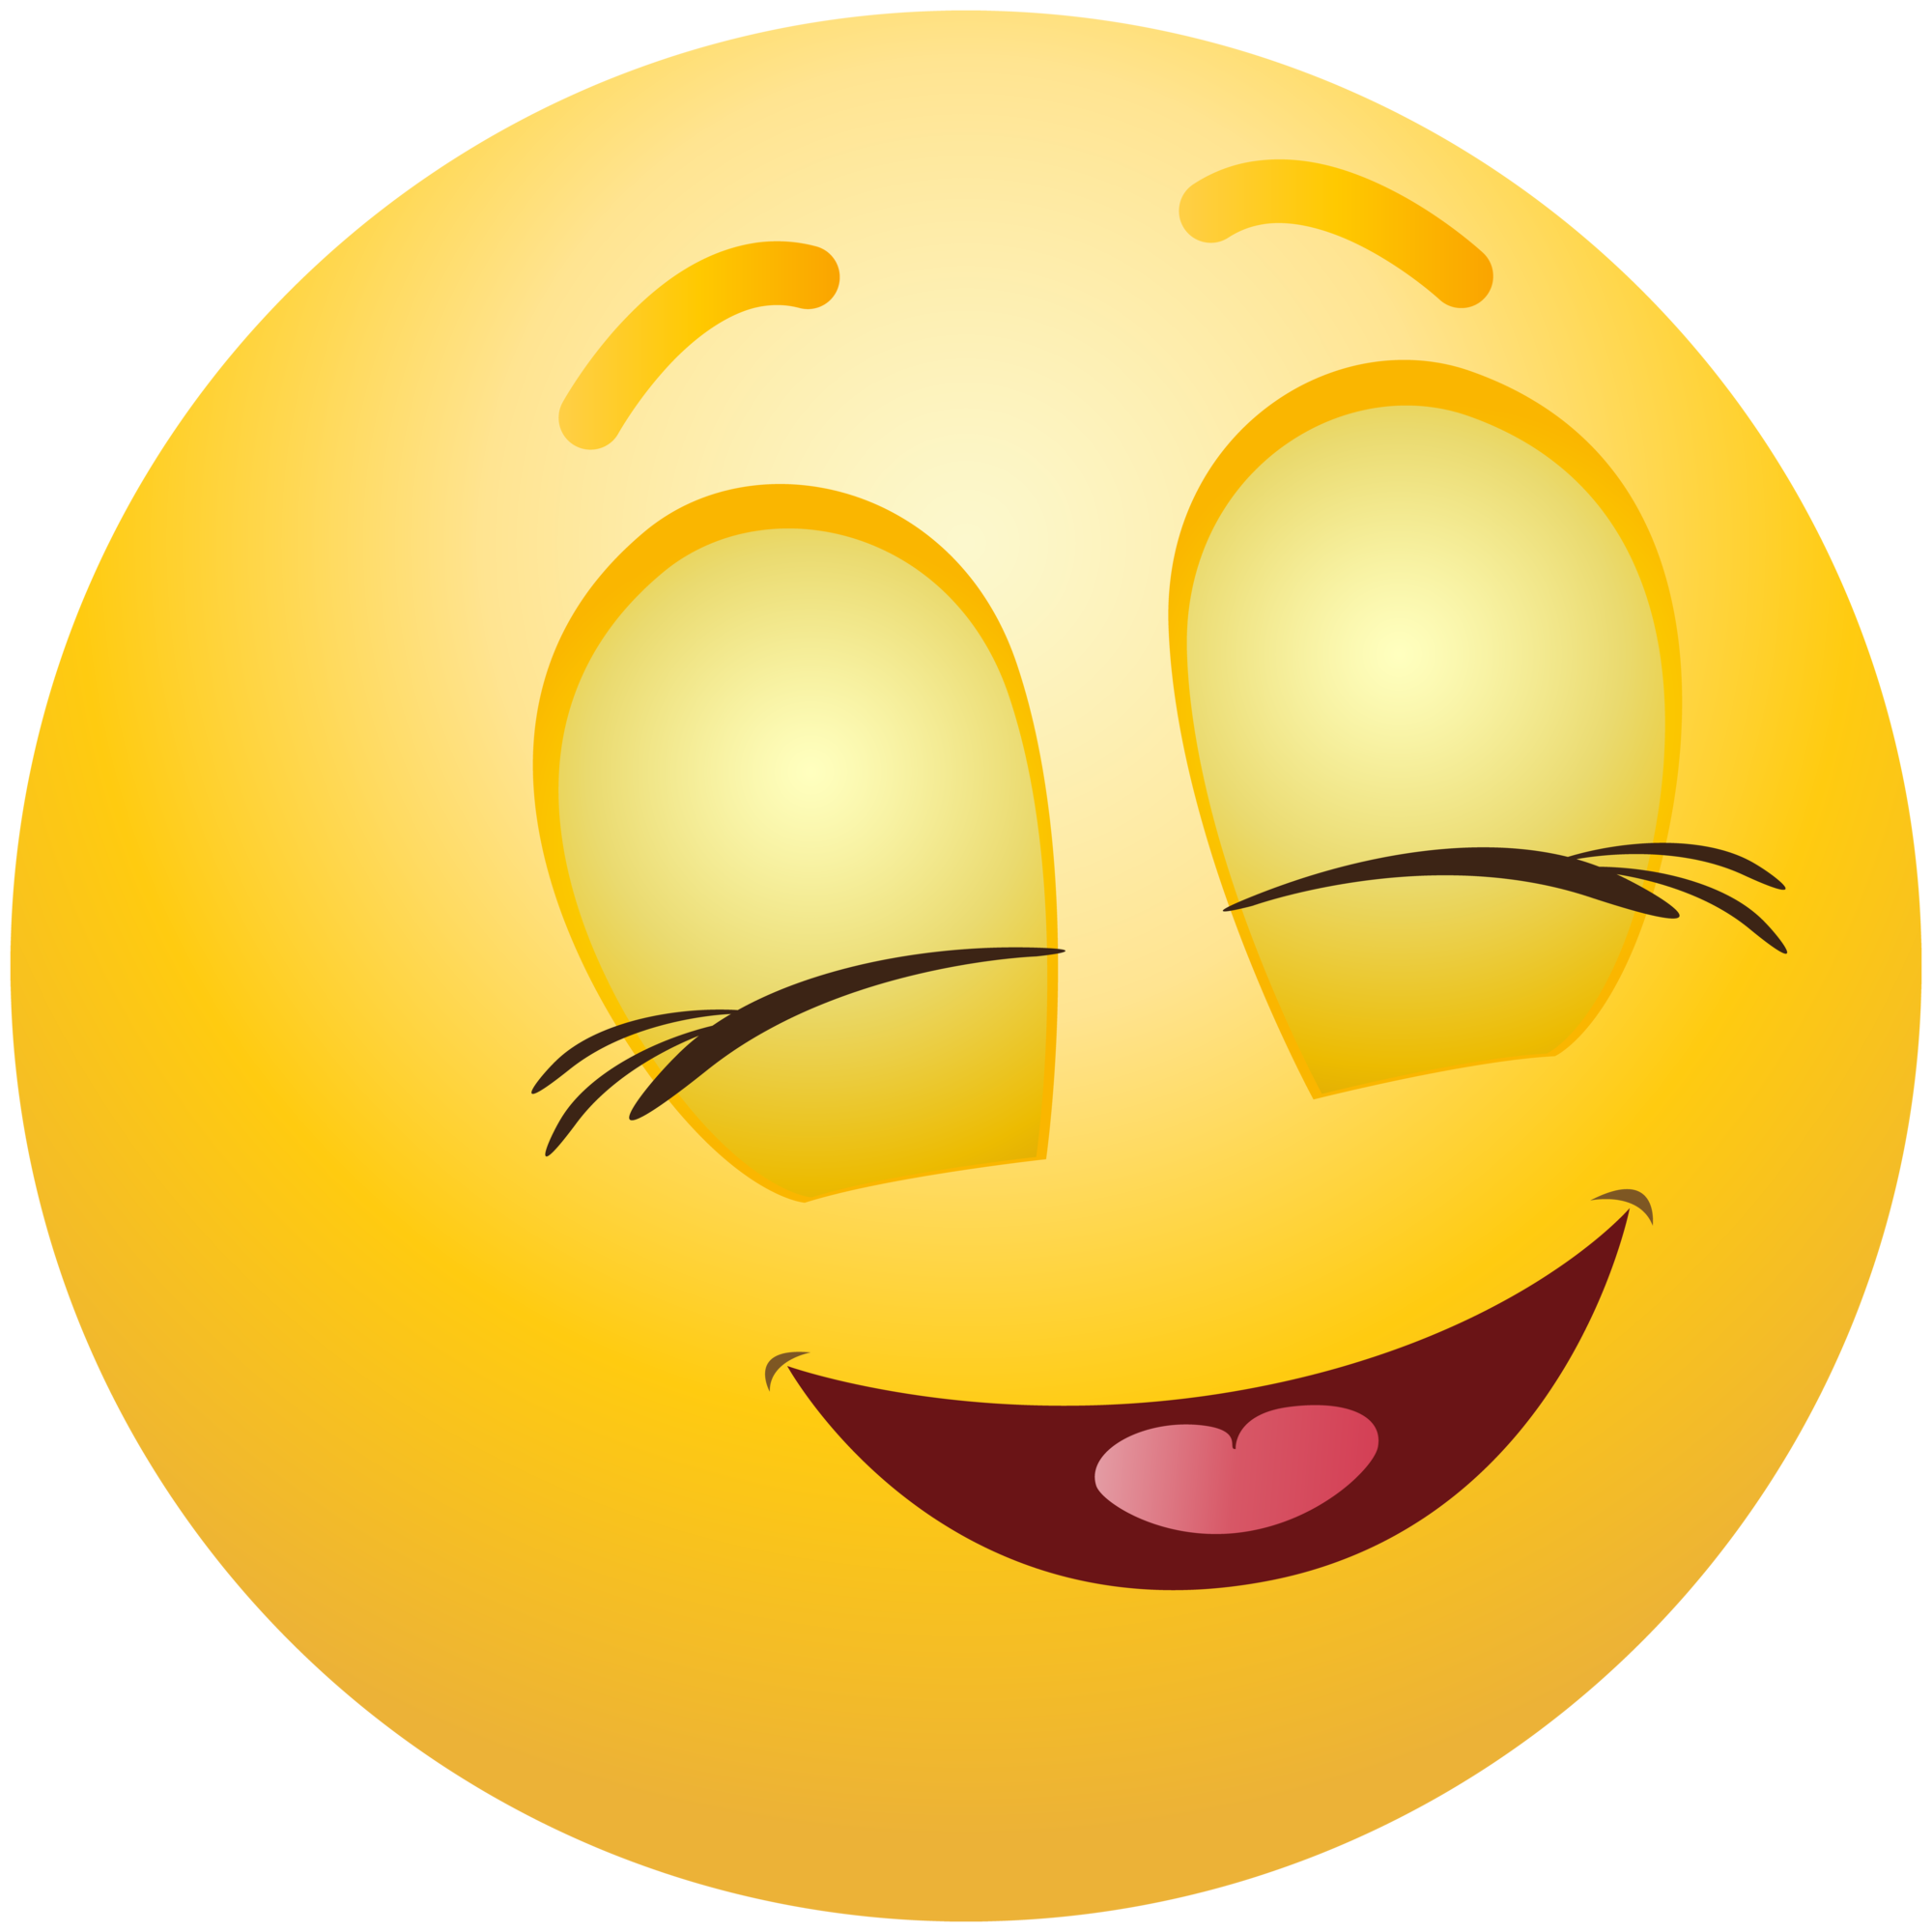 Image for Emoji Smiley 1 Clip